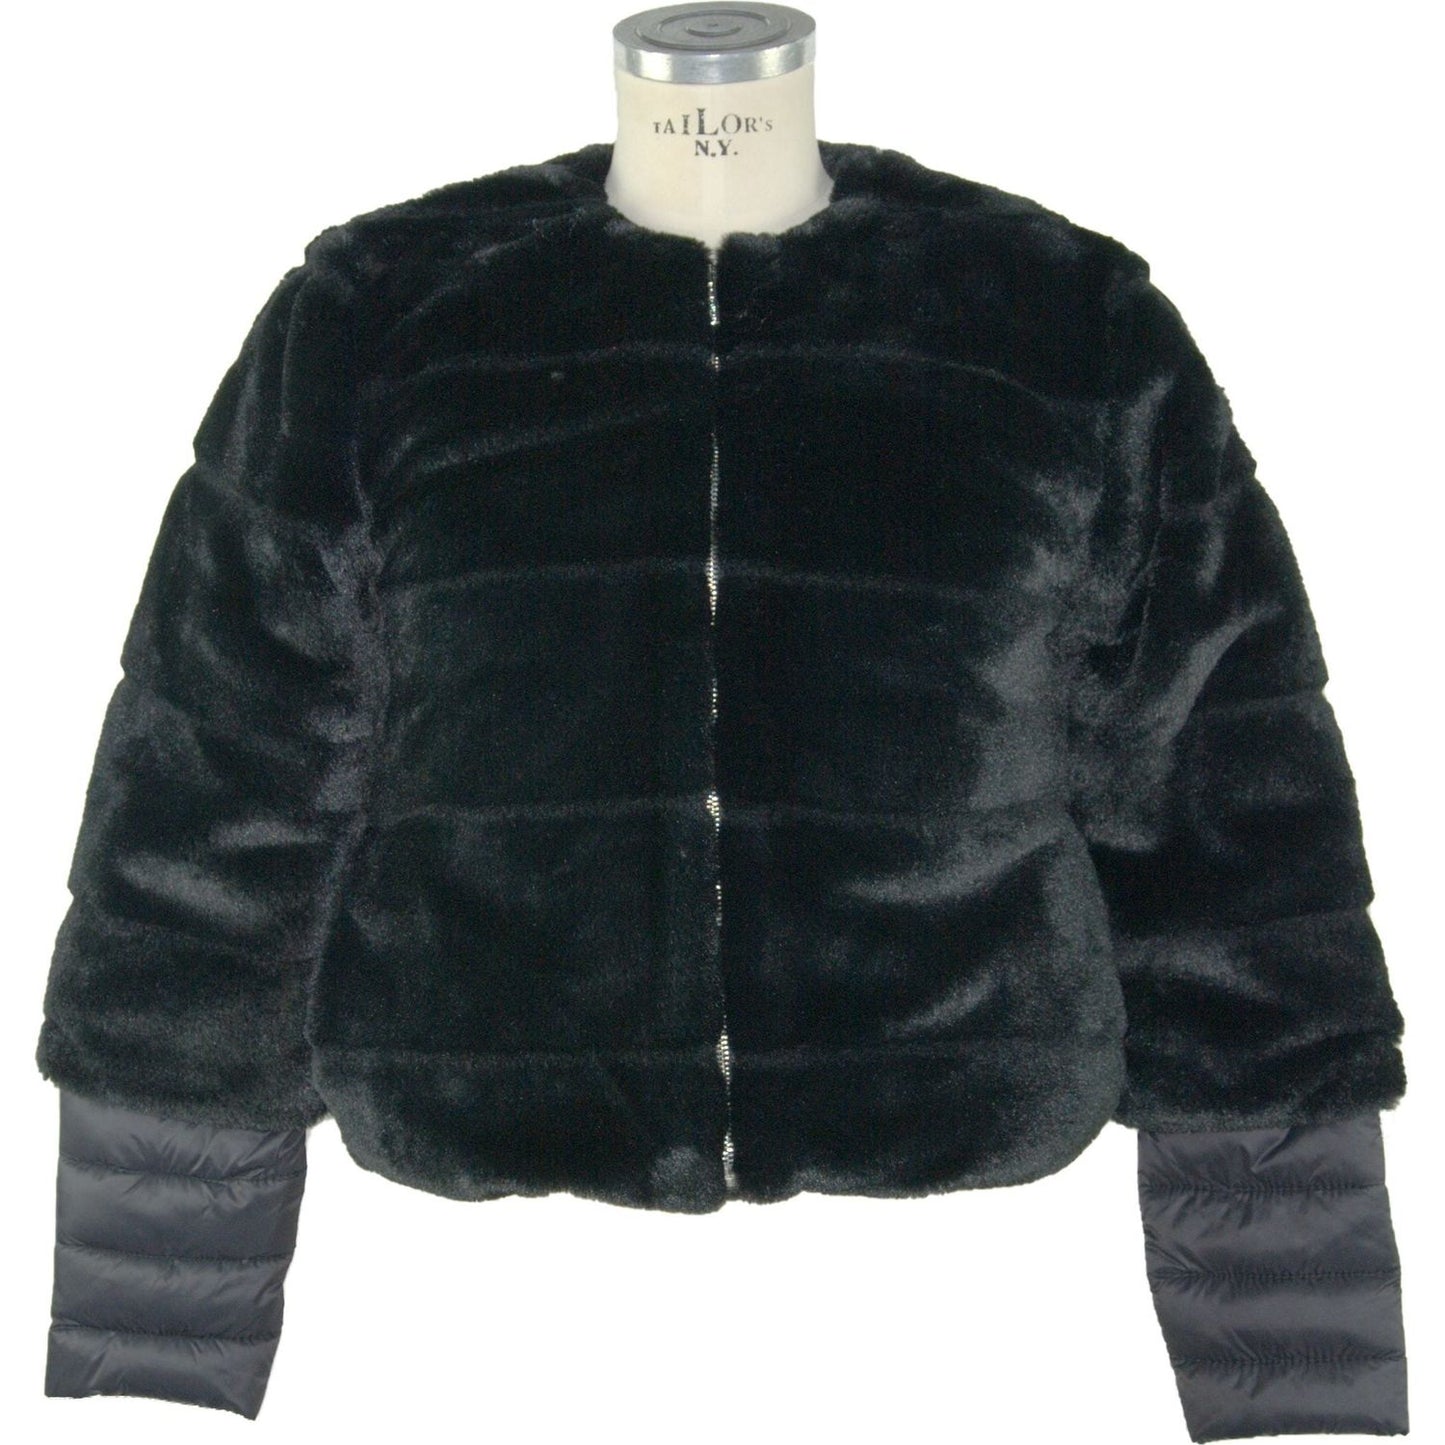 Maison Espin Elegant Black Faux Fur Outerwear black-polyester-jackets-coat-3 WOMAN COATS & JACKETS stock_product_image_1641_246757600-3-f5947ad2-1f9.jpg